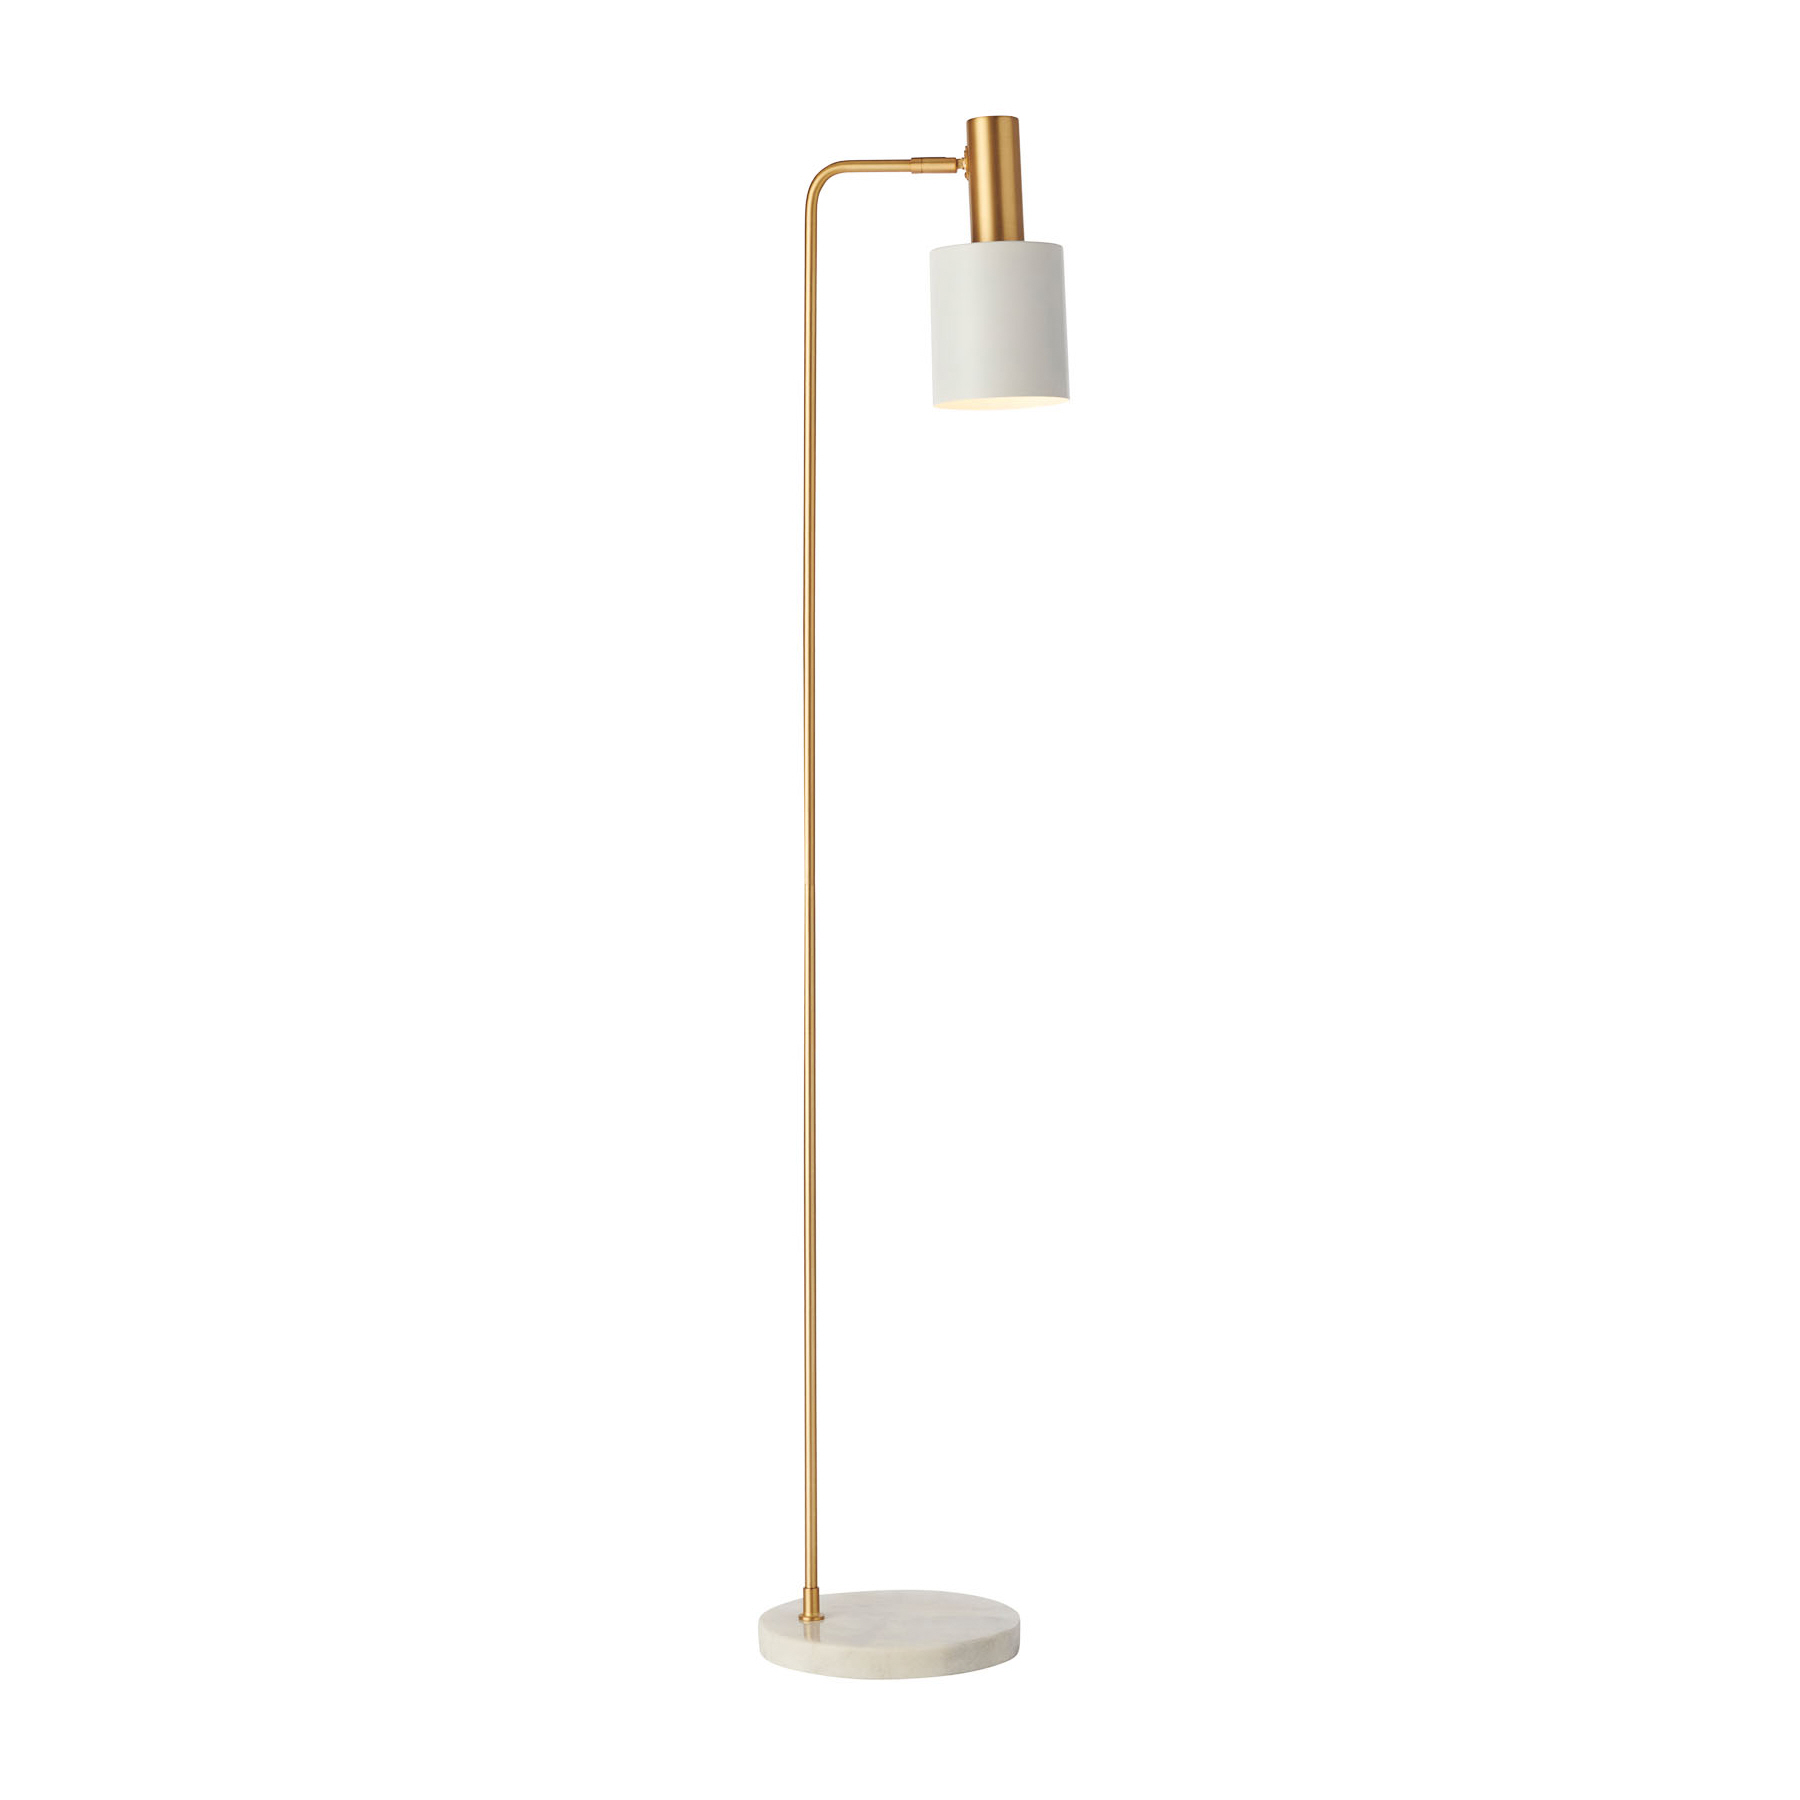 Mahala Brass Floor Lamp with White Shade